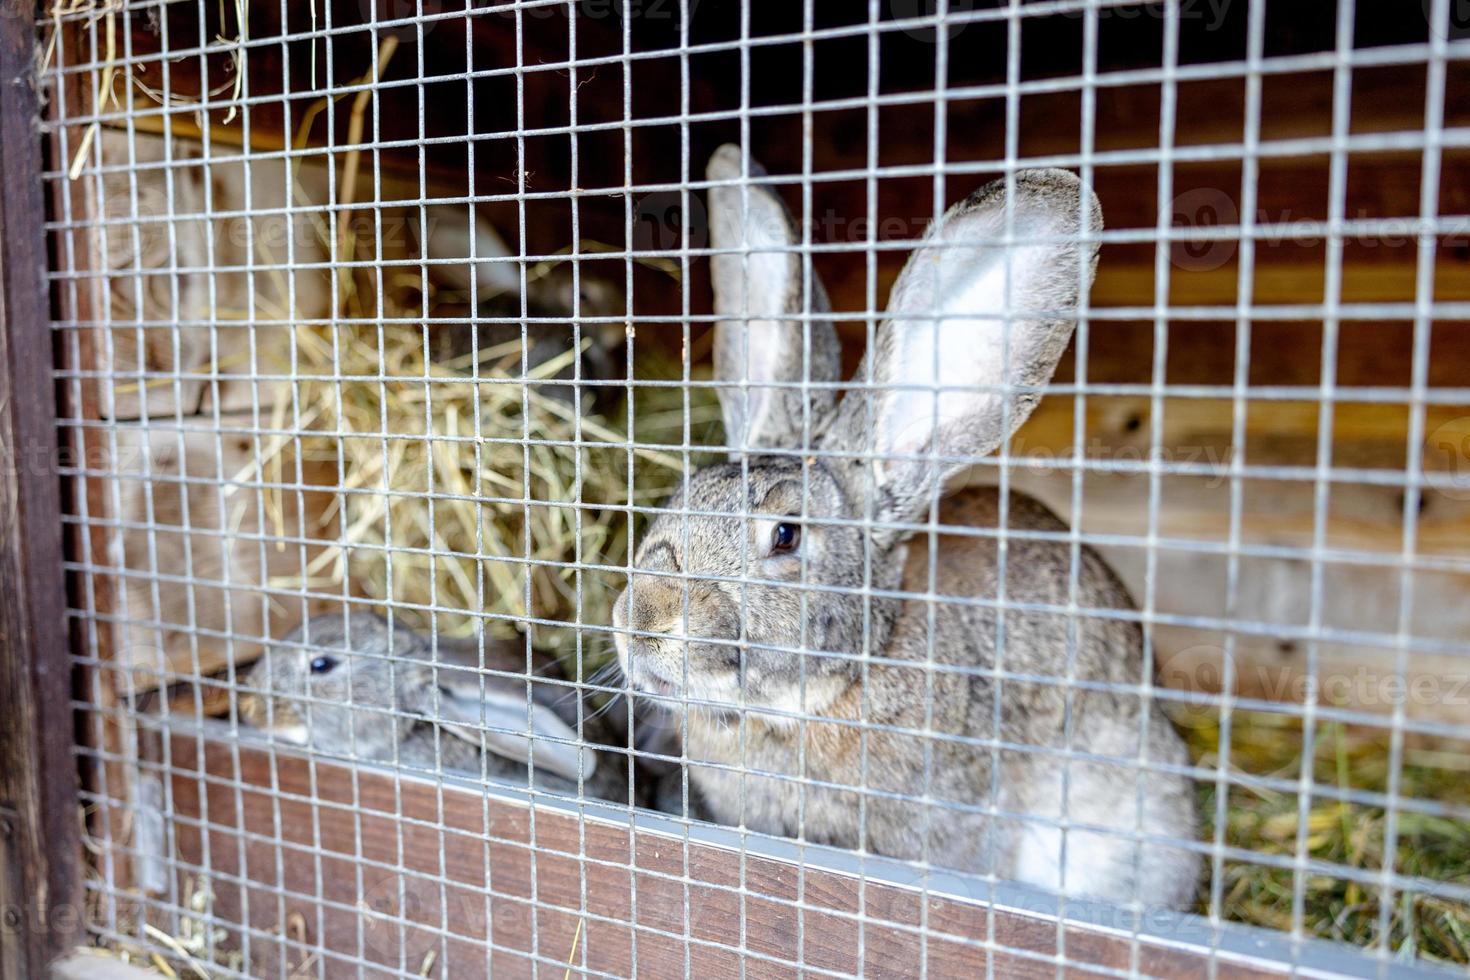 söt kaniner på djur- bruka i kanin-koja. kanin i bur på naturlig eco odla. djur- boskap och ekologisk jordbruk. foto